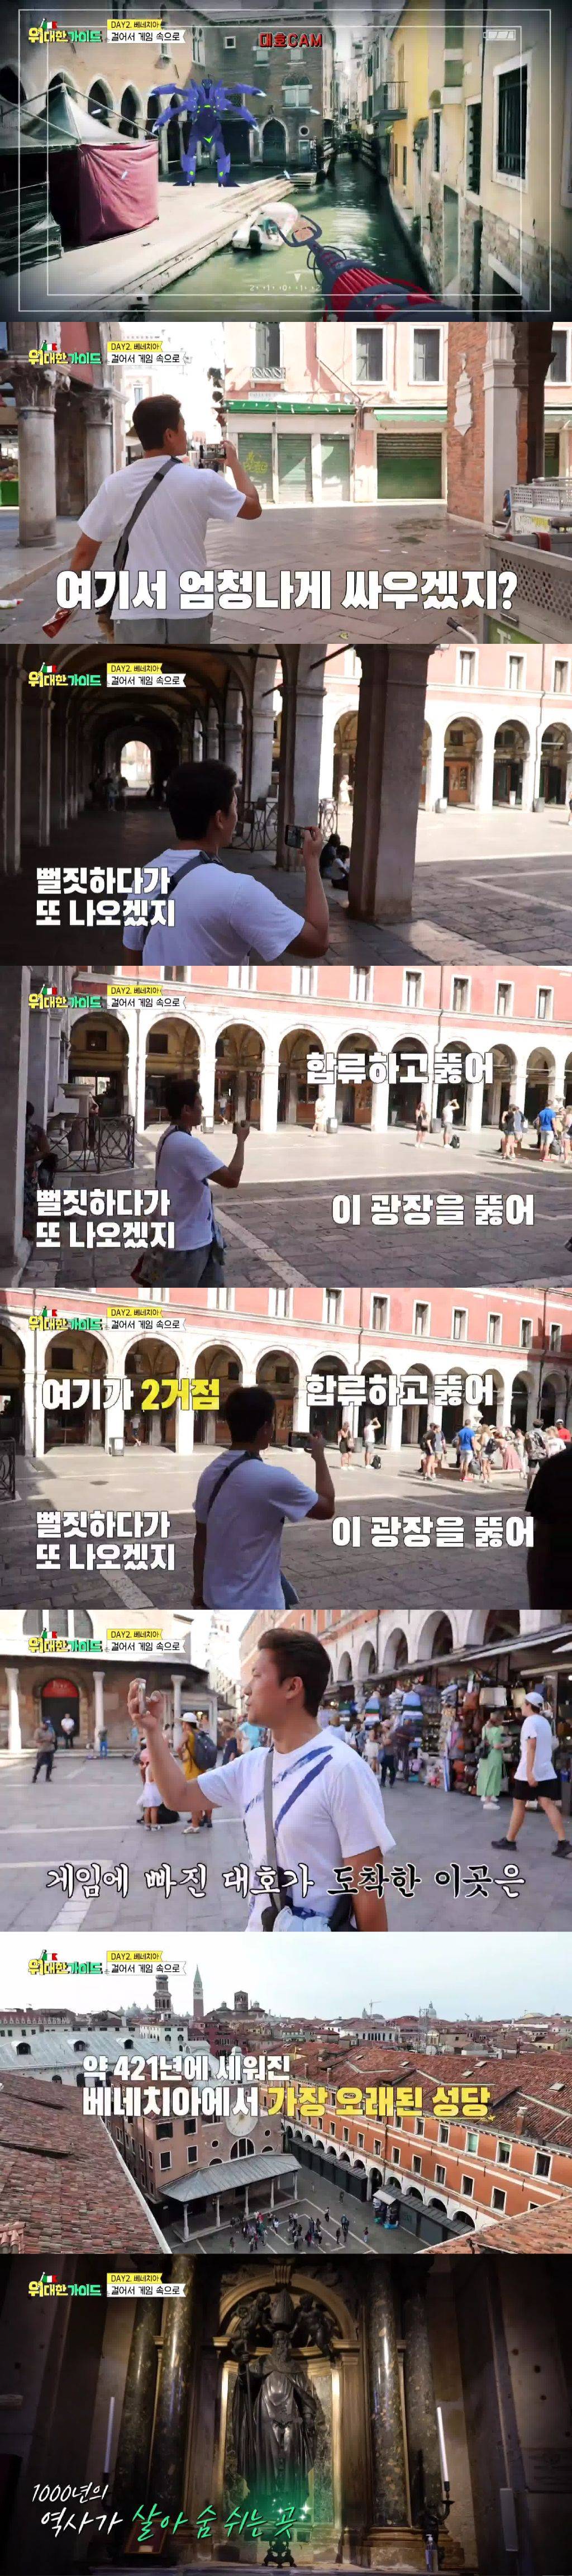 MBC 여행 프로에서 이탈리아 여행 간 김대호 아나운서 근황 | 인스티즈